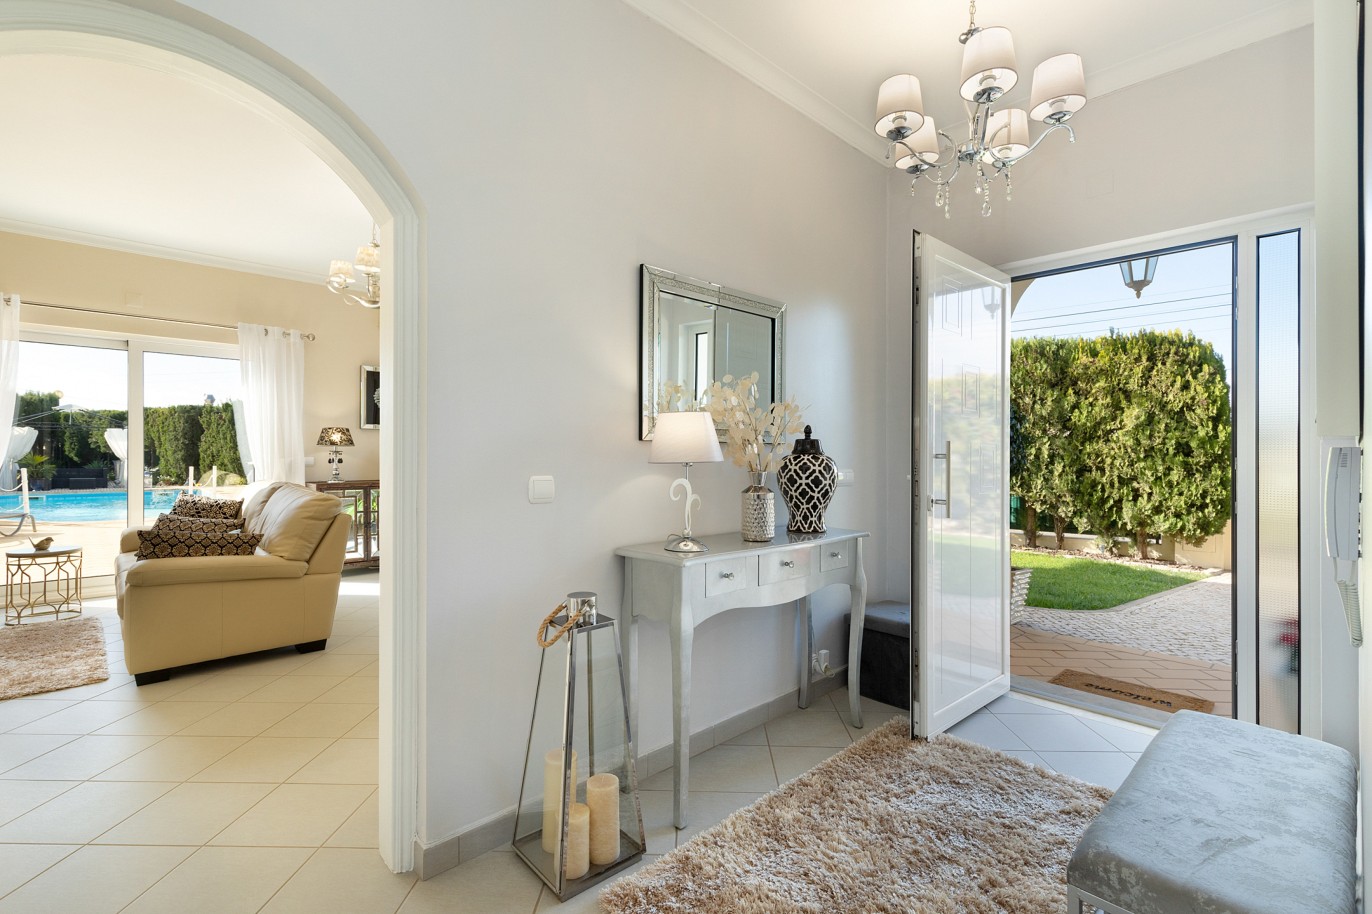 Fantastic 3 bedroom villa with pool, for sale in Algoz, Algarve_215654